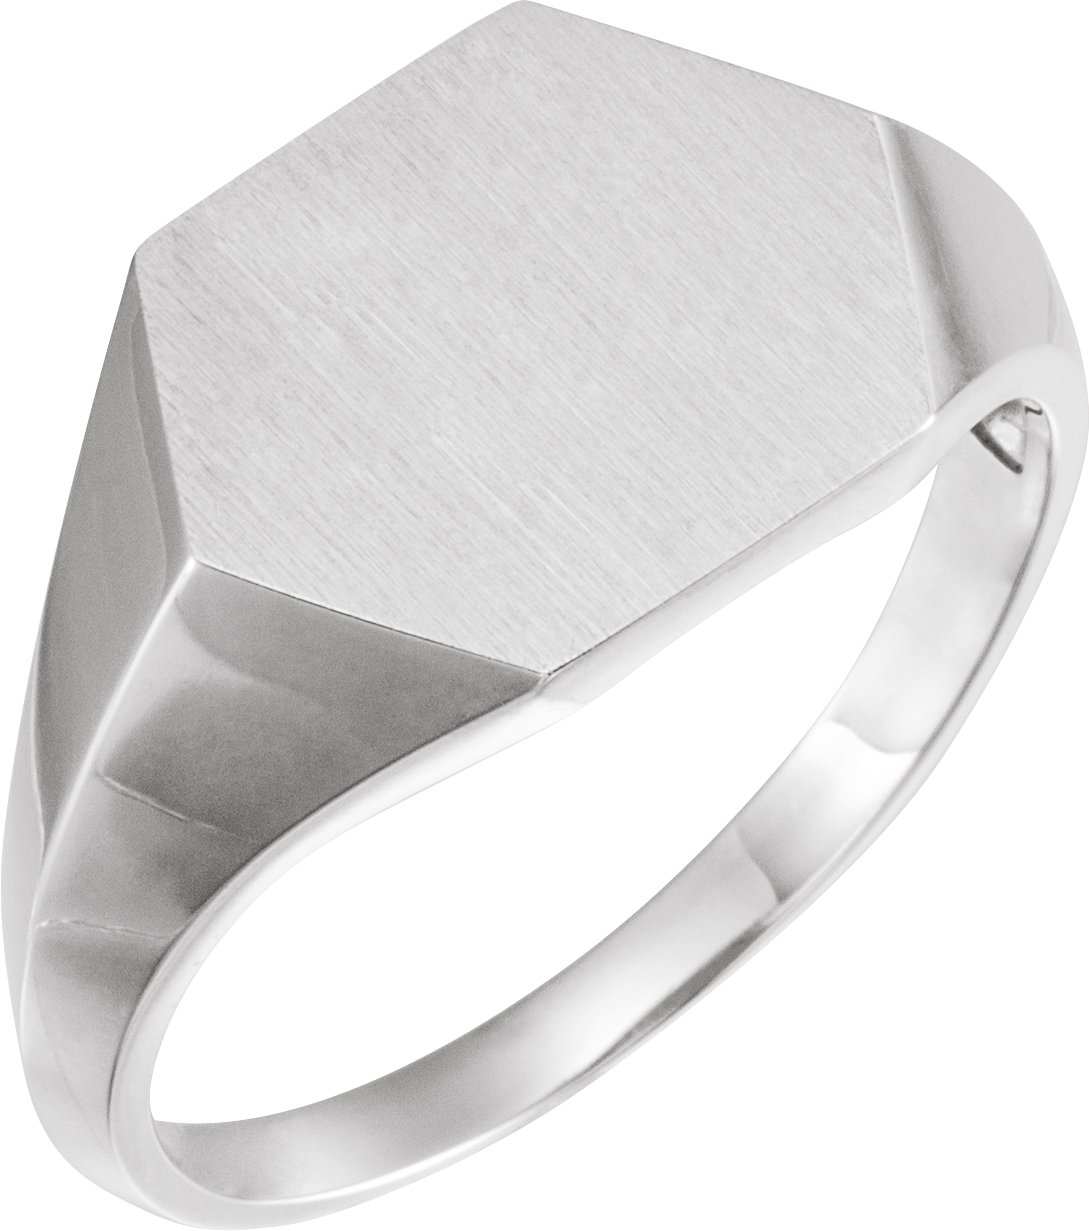 Sterling Silver 14 mm Hexagon Signet Ring